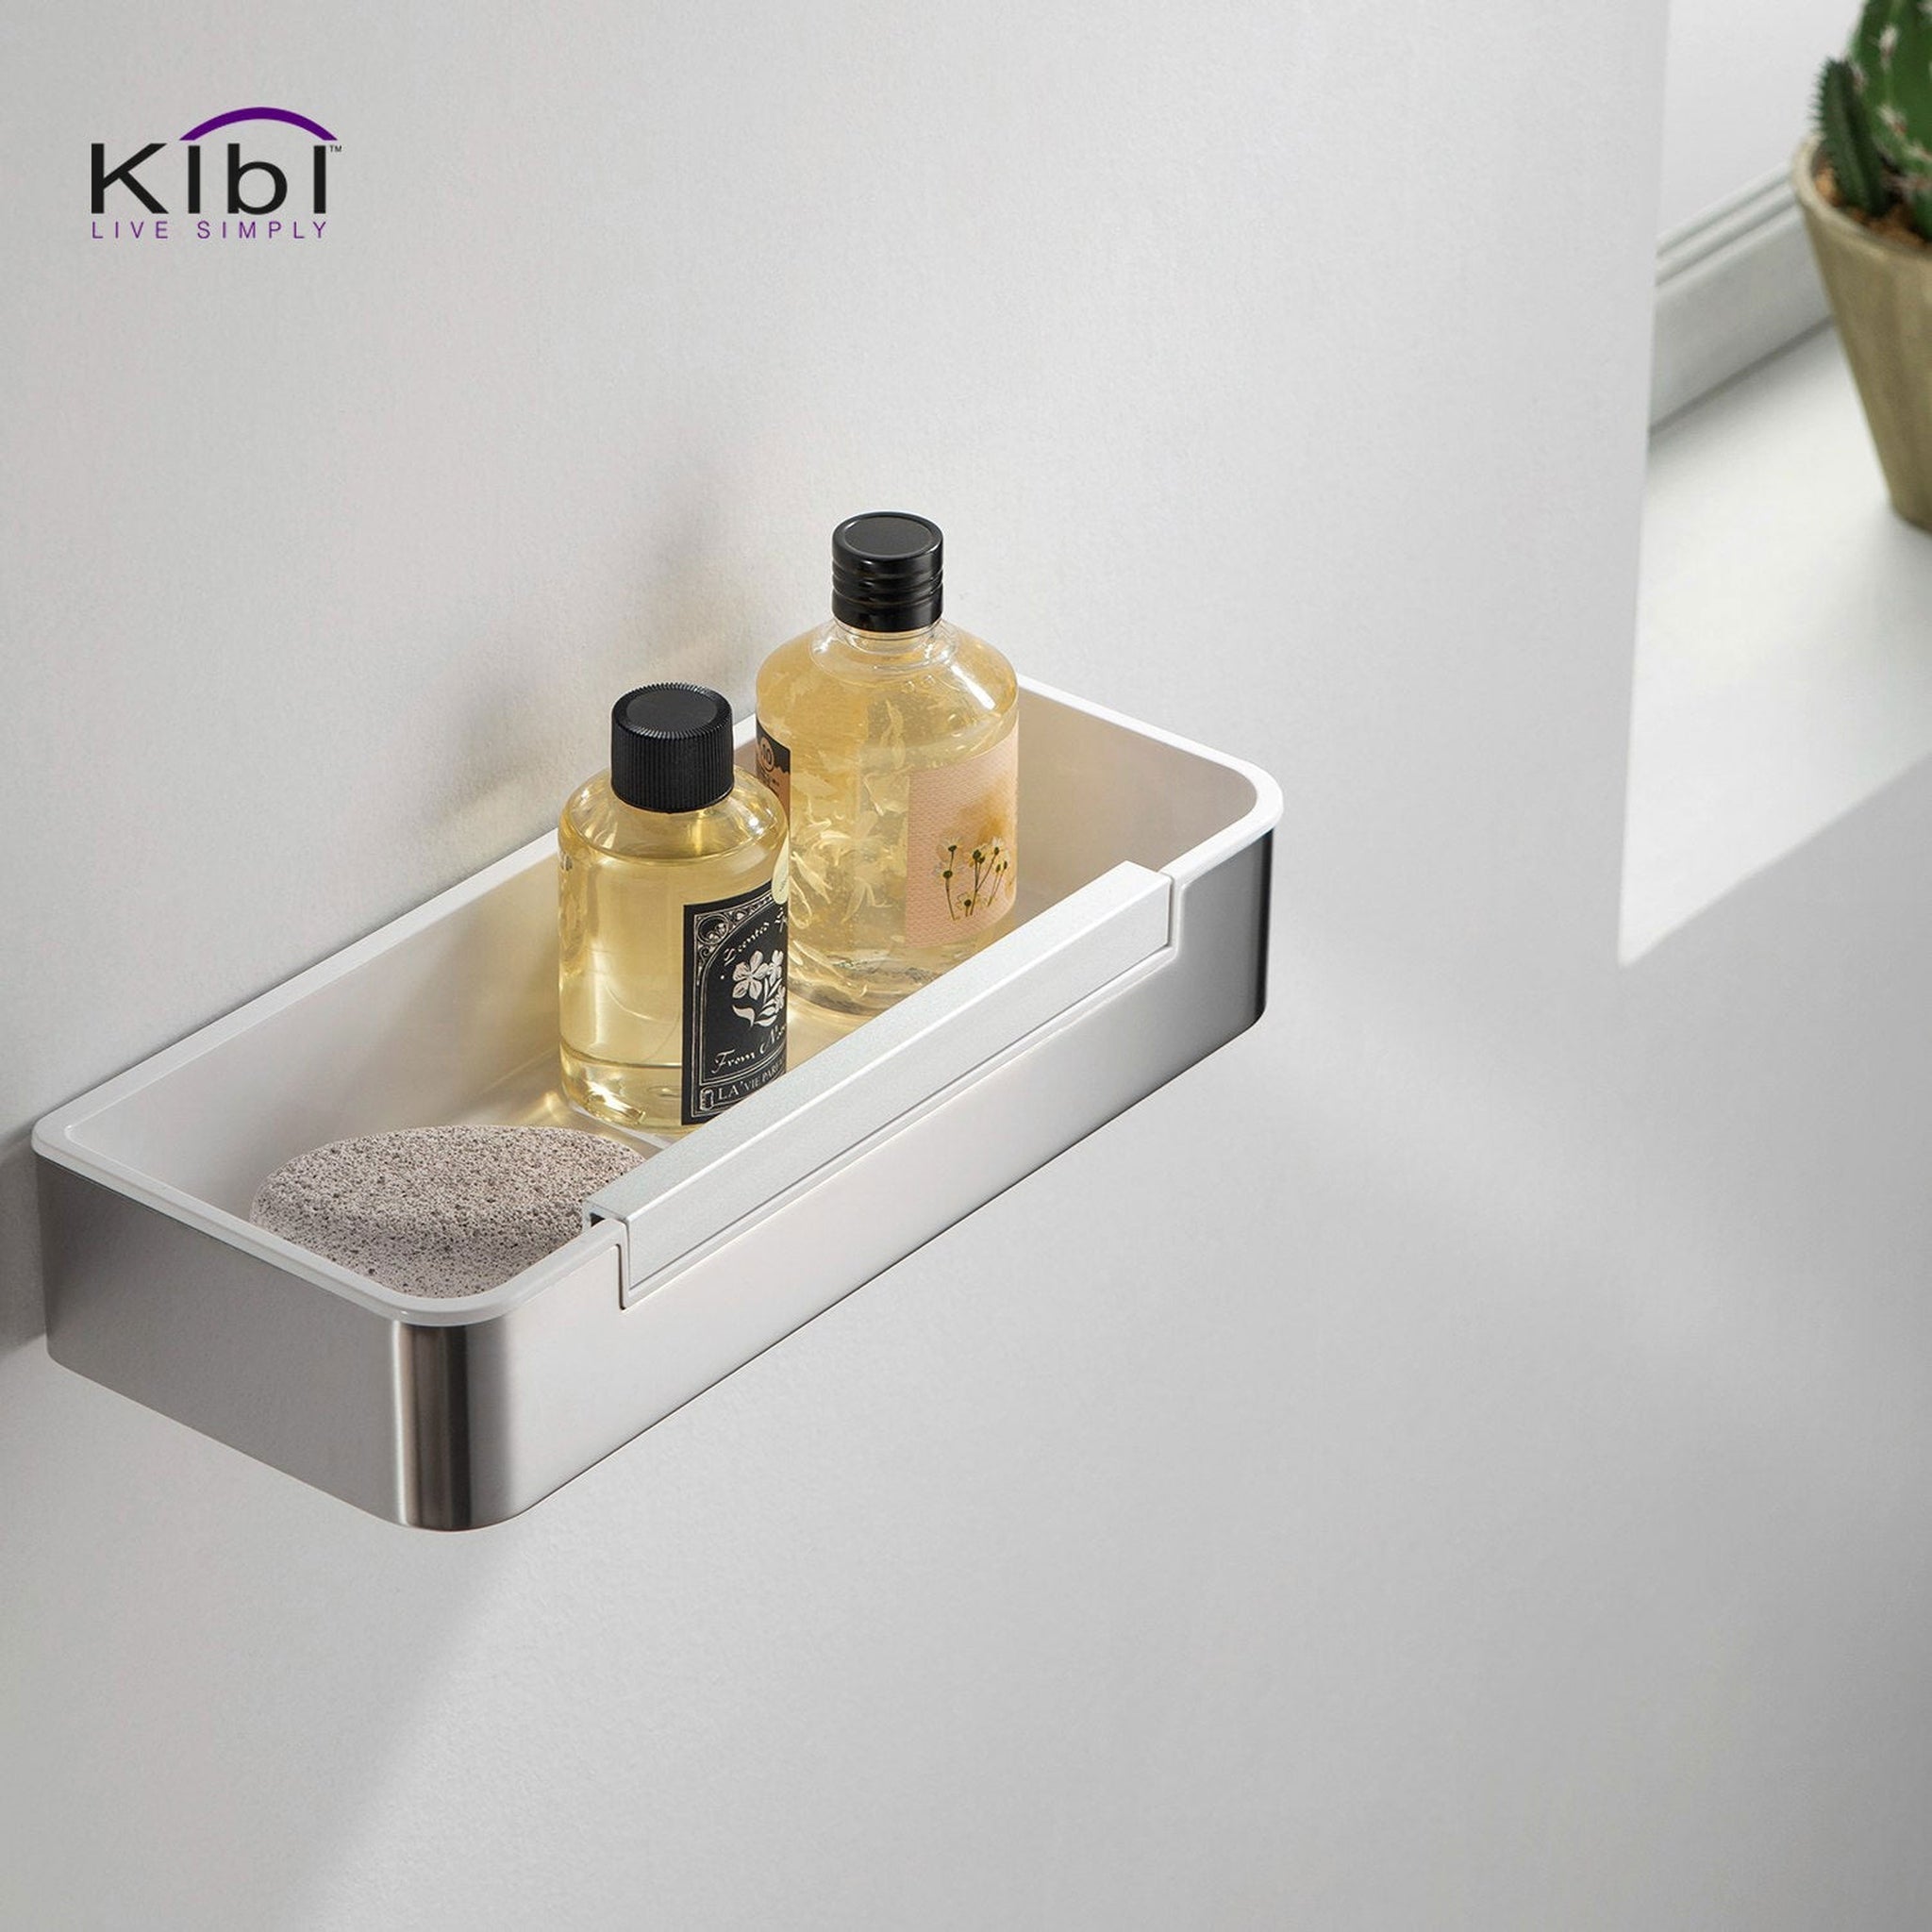 KIBI, KIBI Deco Bathroom Shower Basket in Chrome Finish